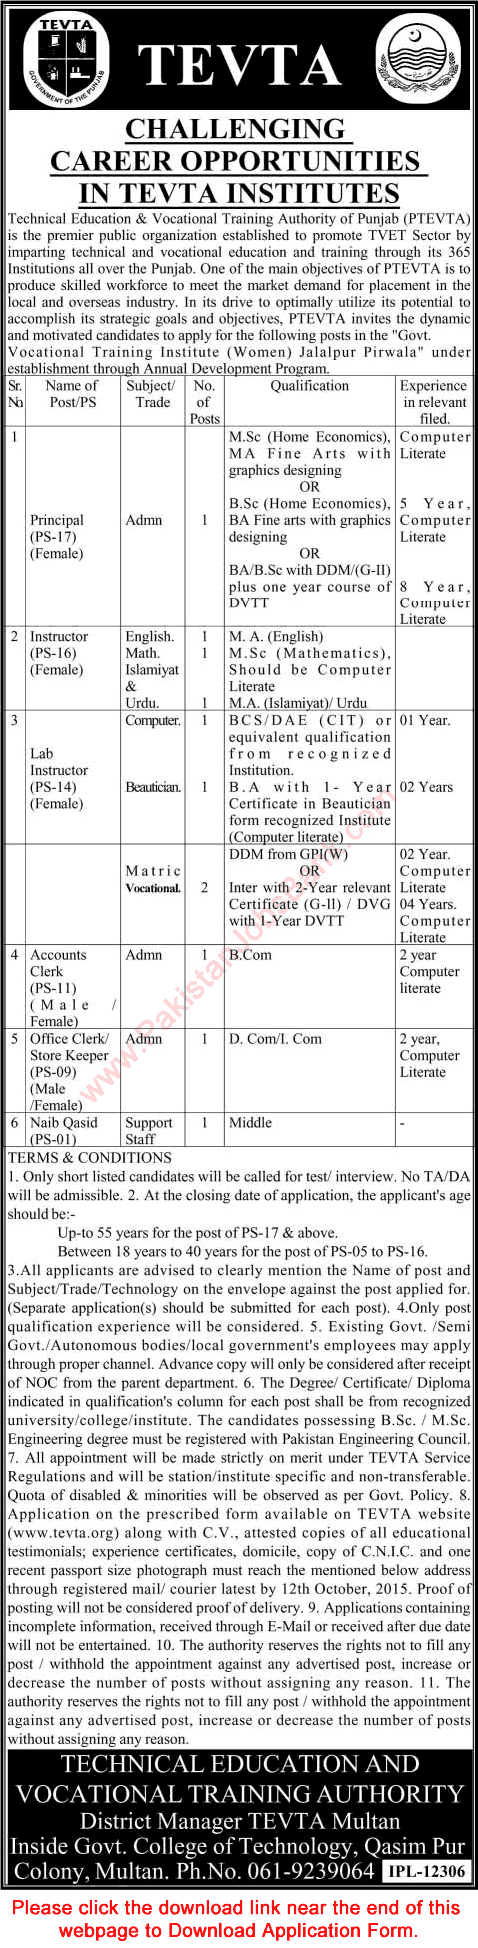 TEVTA Government College of Technology Multan Jobs 2015 September Application Form Latest